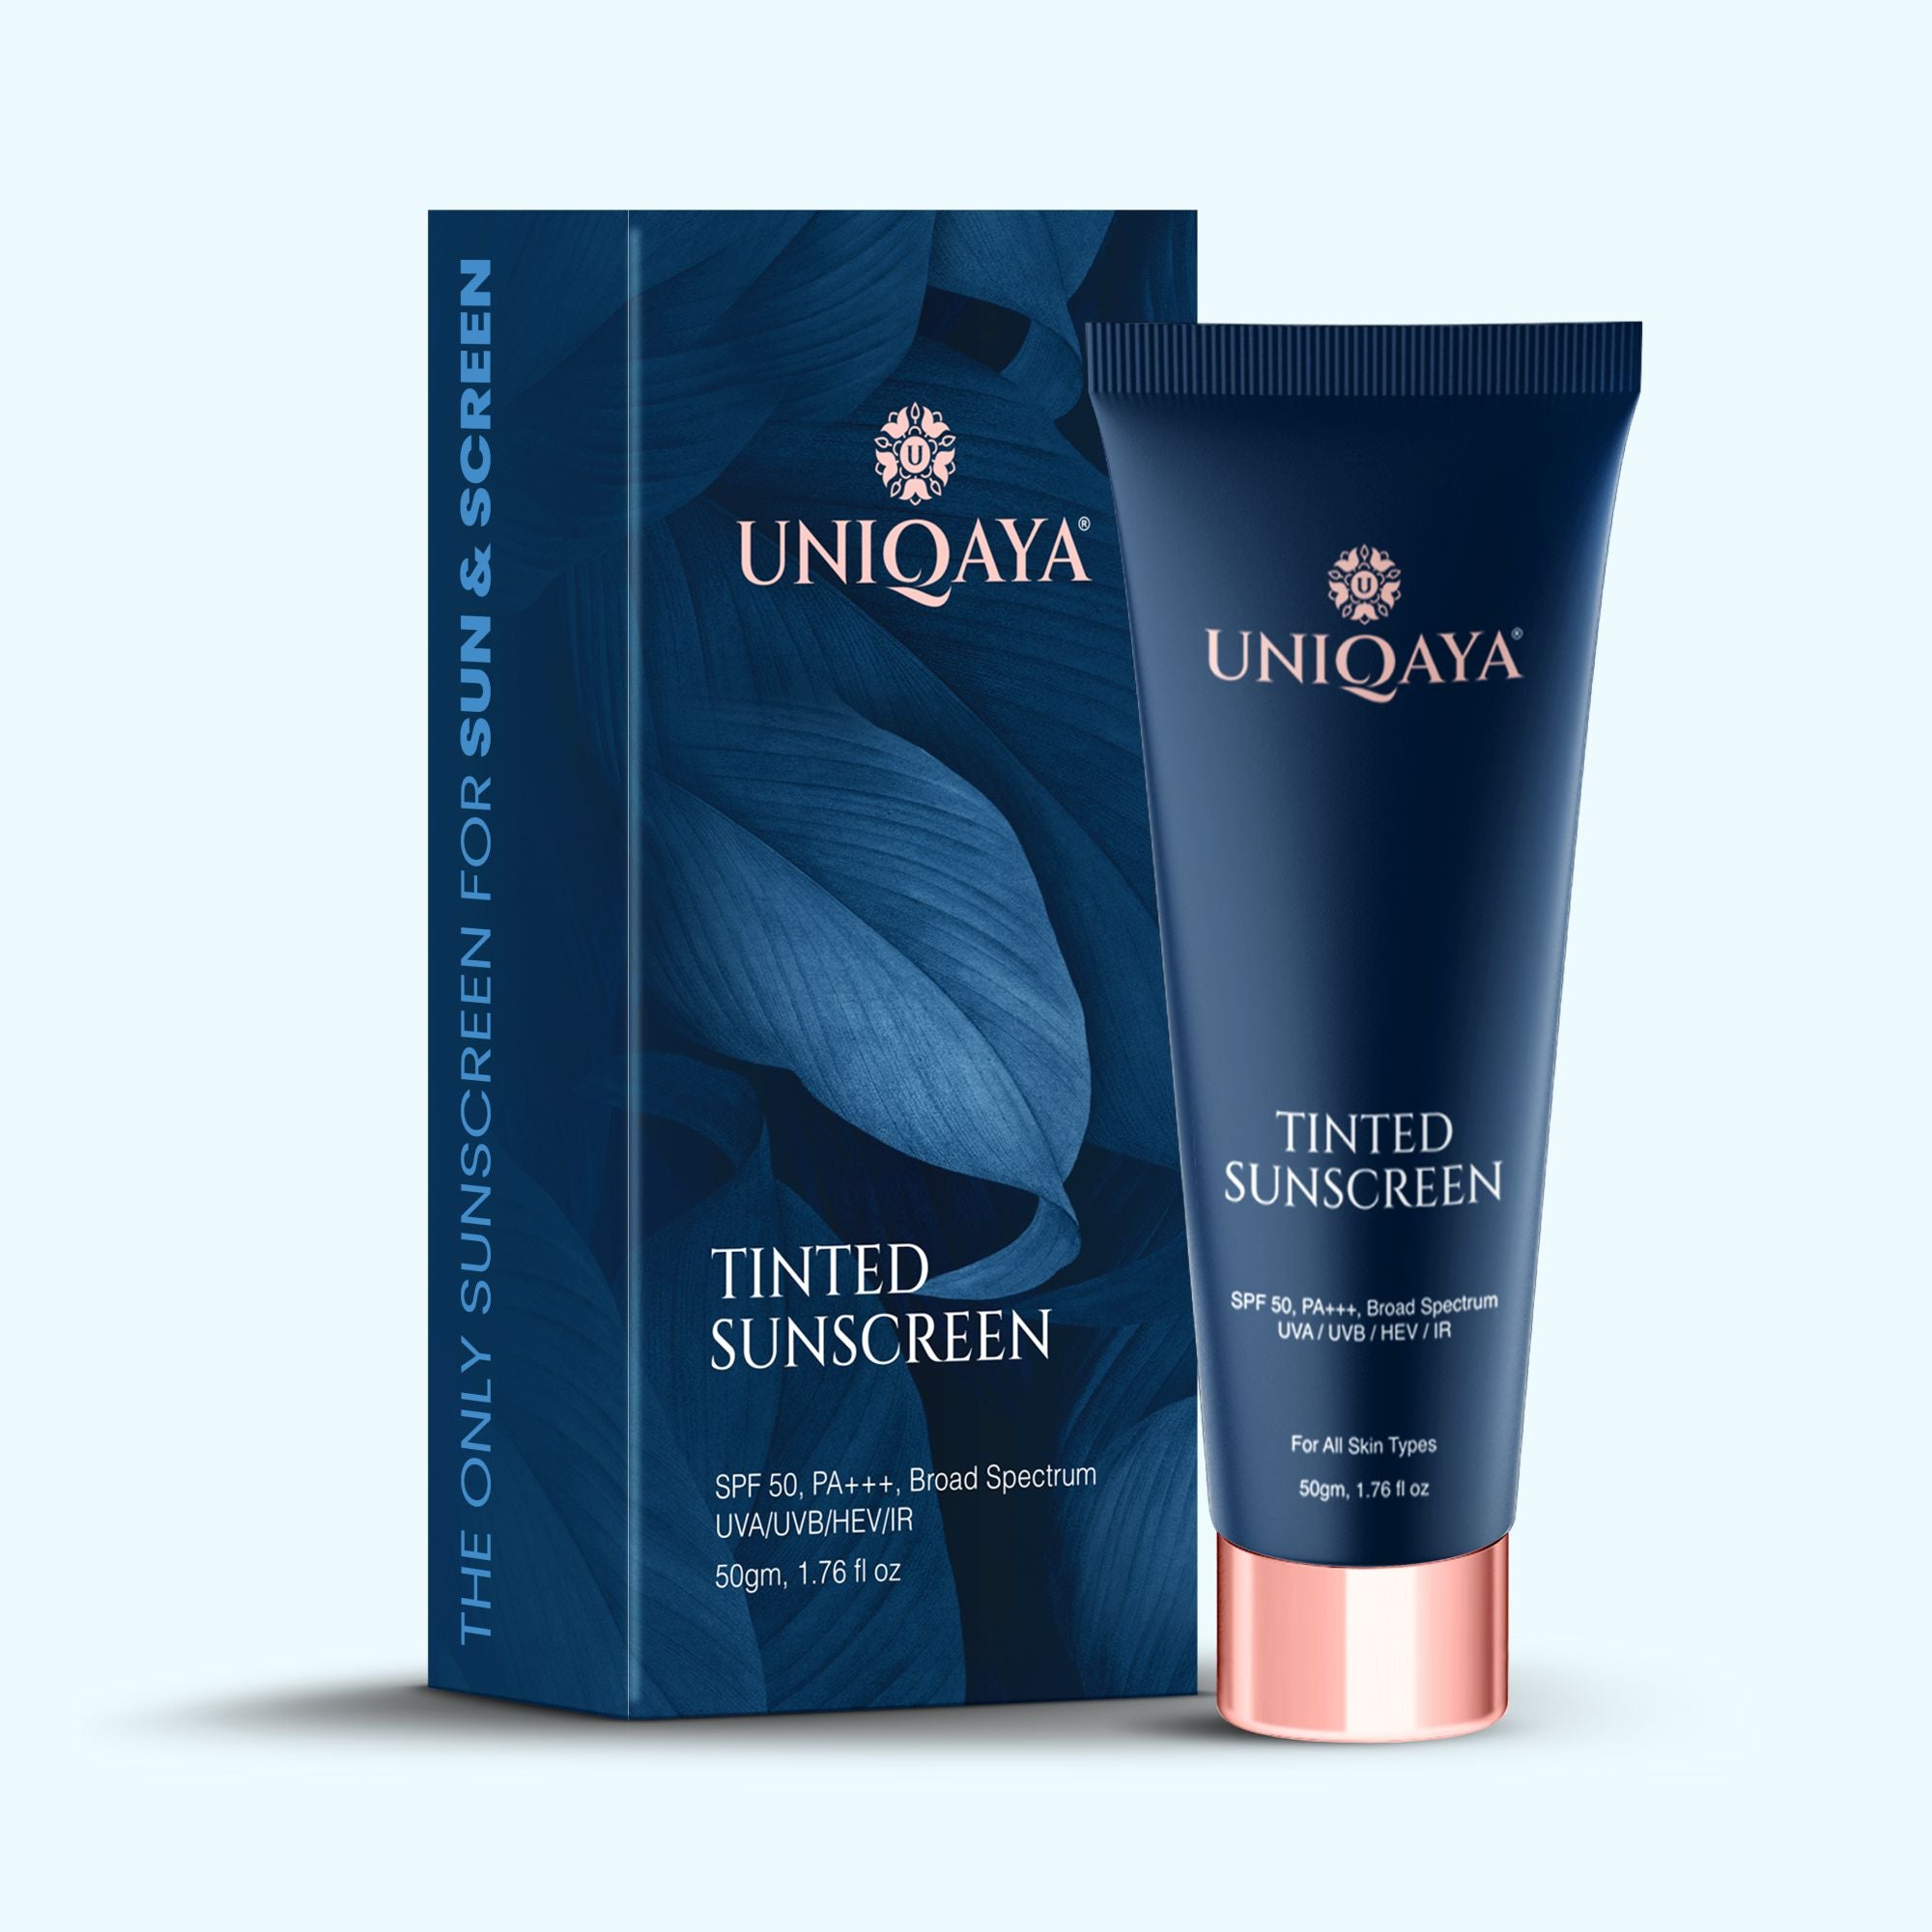 Uniqaya Tinted Sunscreen SPF 50 PA+++